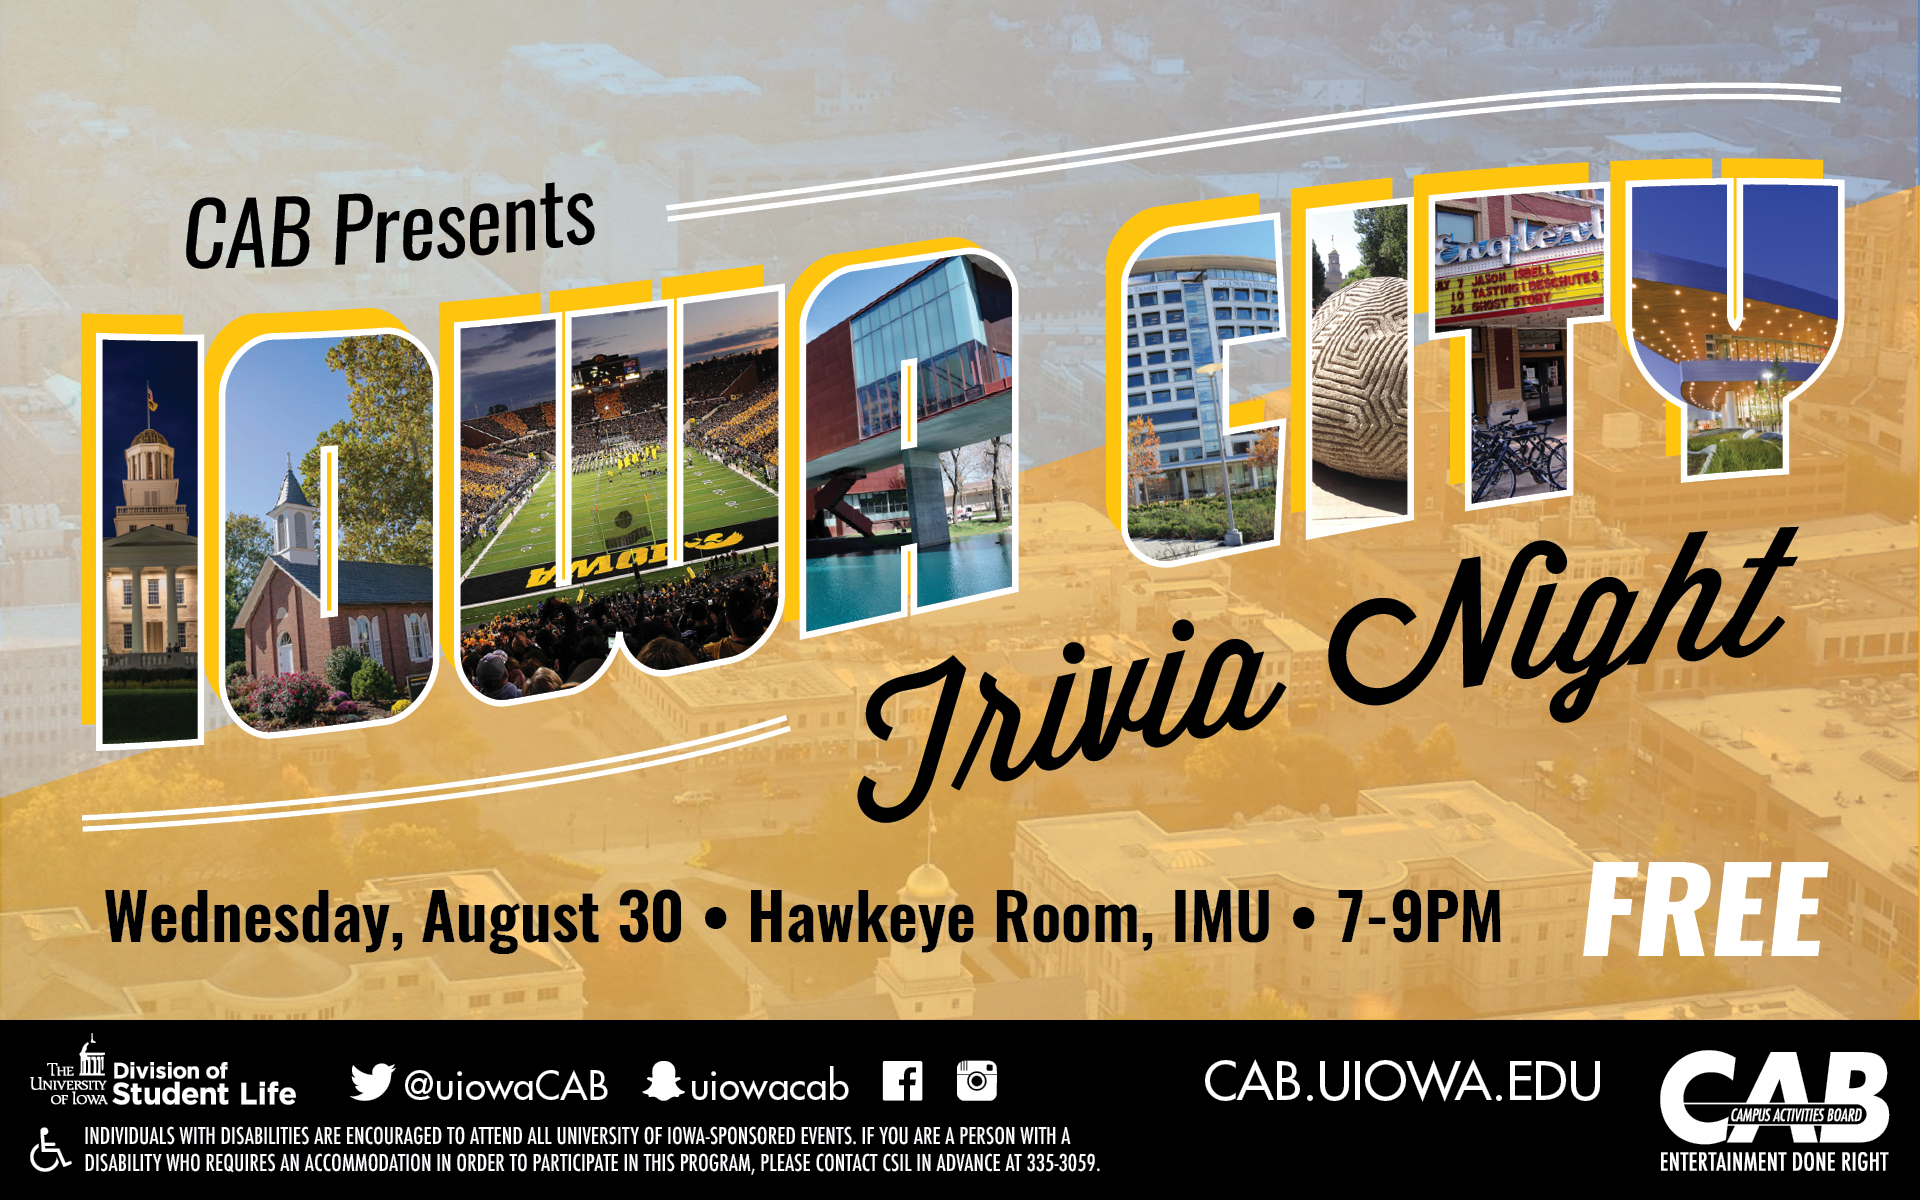 Iowa City trivia night:  Hawkeye Room, IMU, Wednesday, August 30, 7 to 9 pm